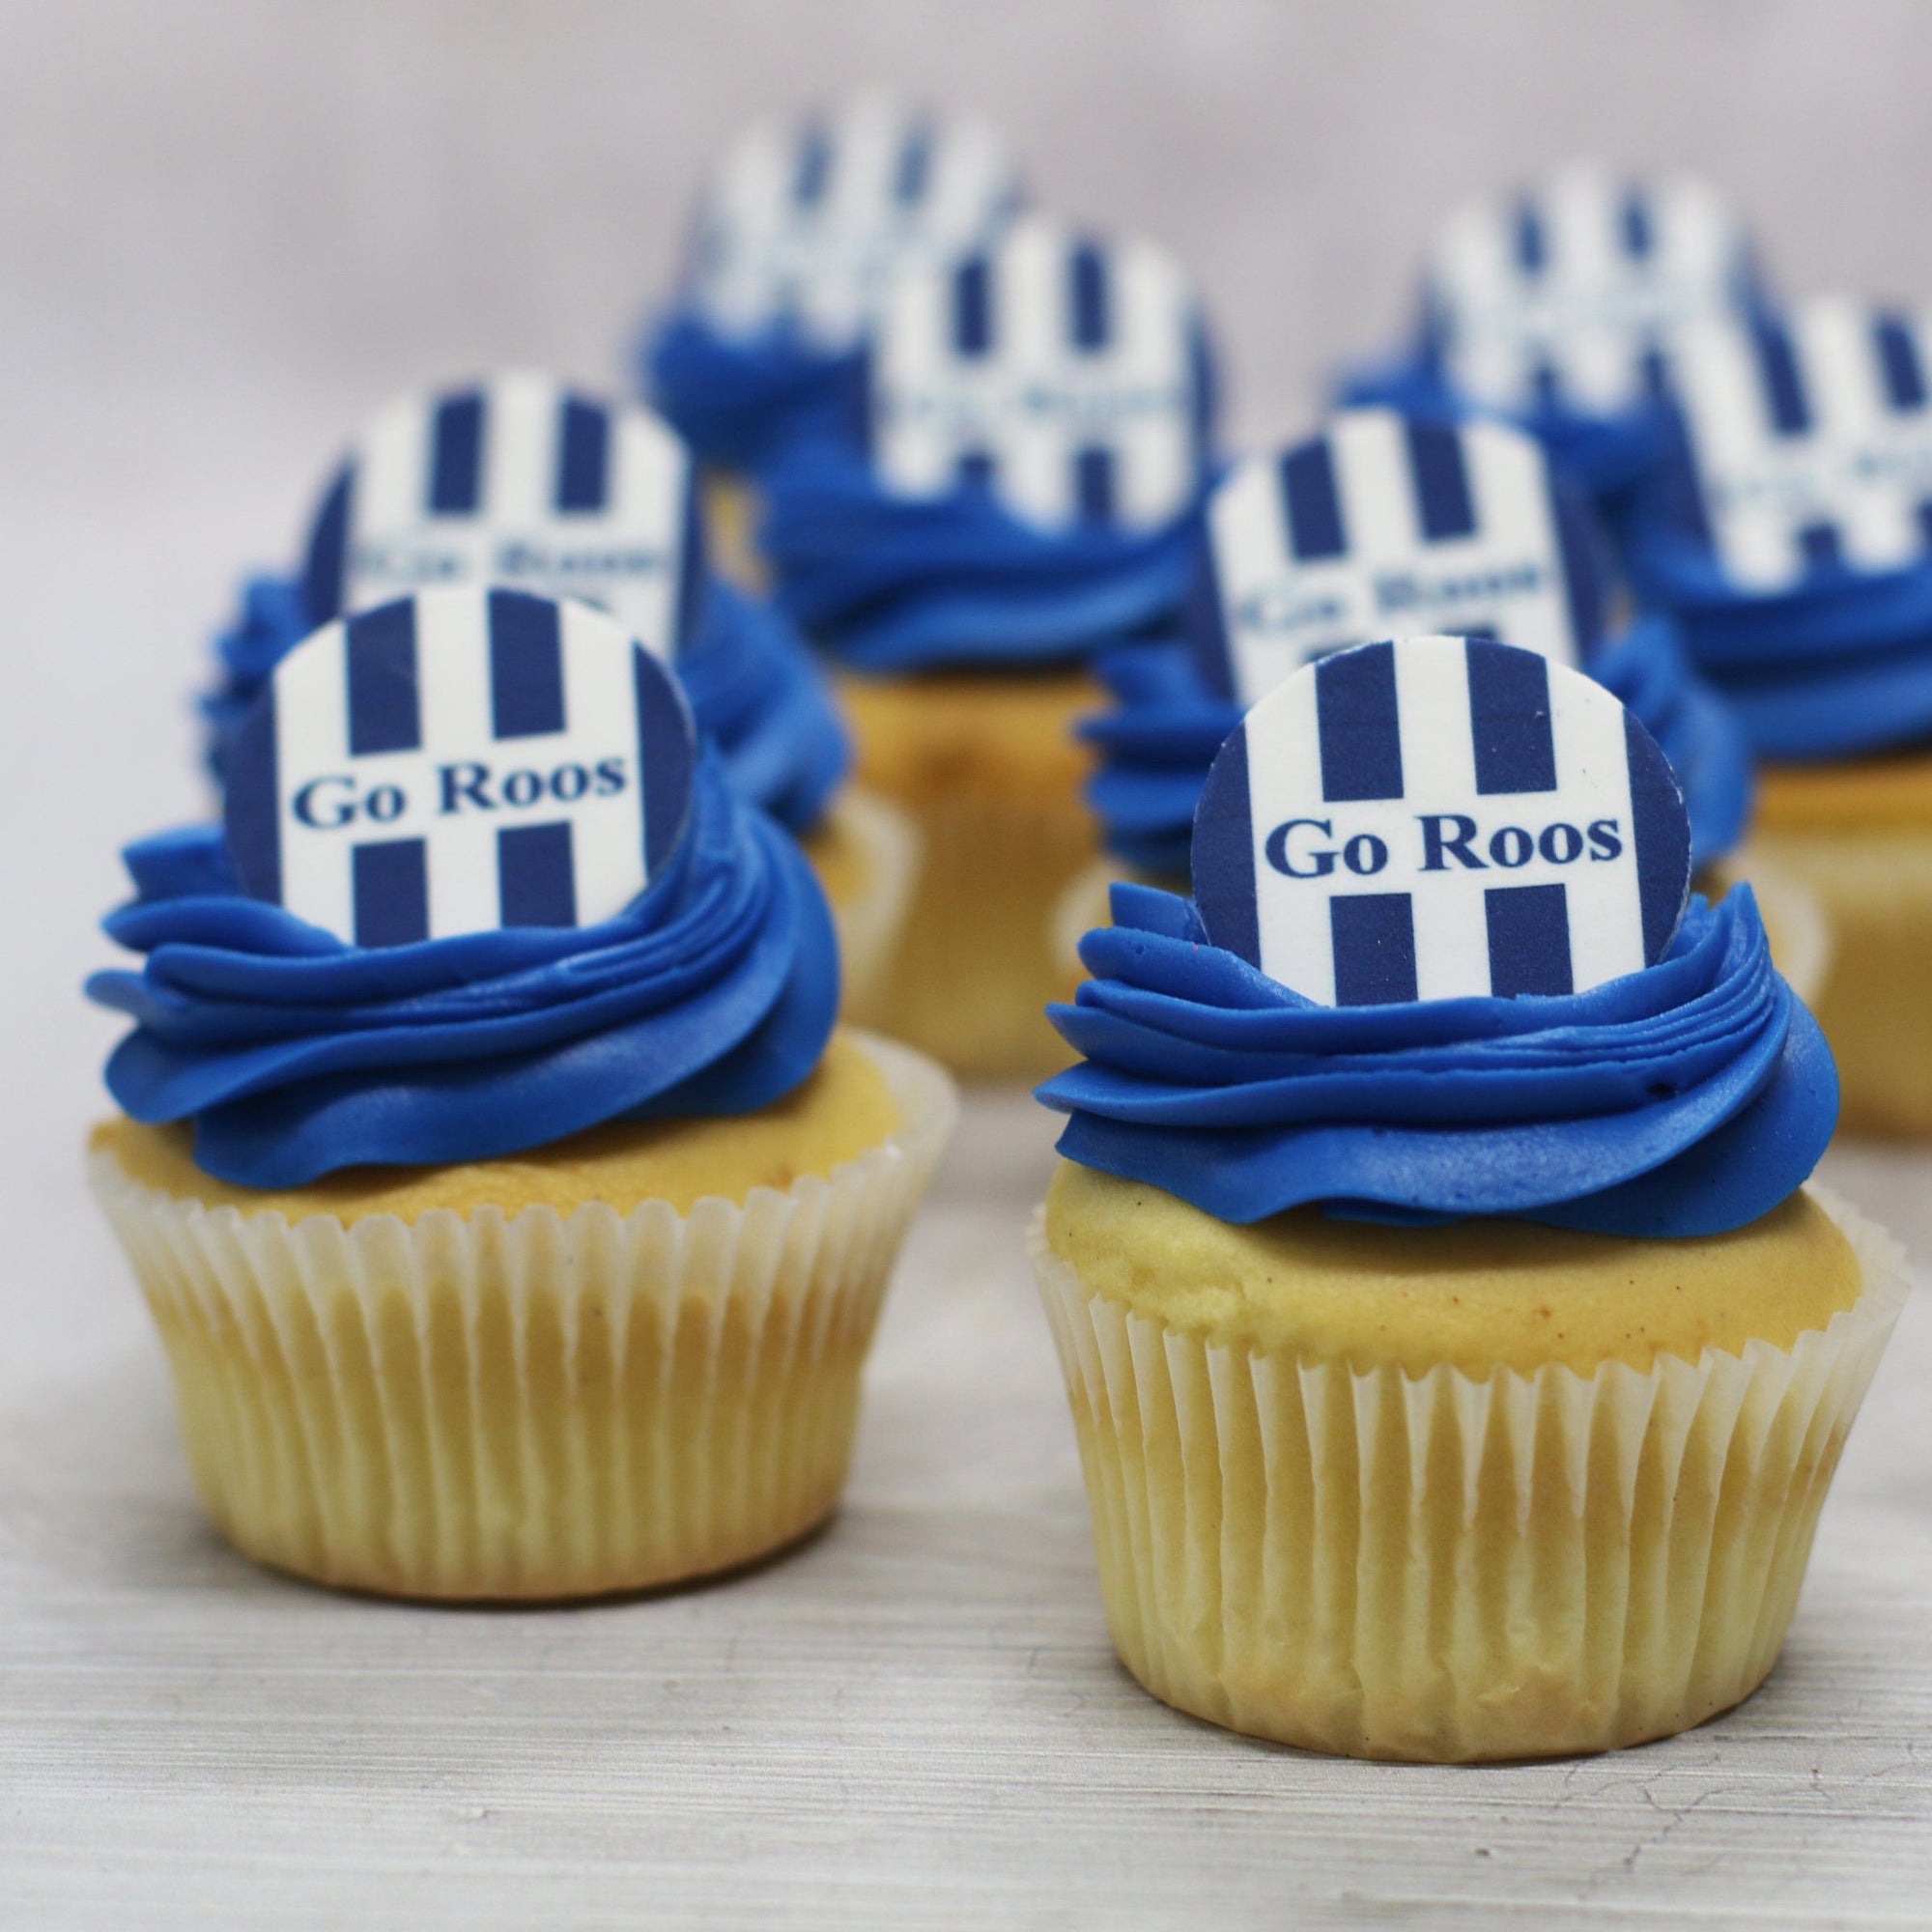 Go Roos - Football Cupcakes Cupcakes The Cupcake Queens 